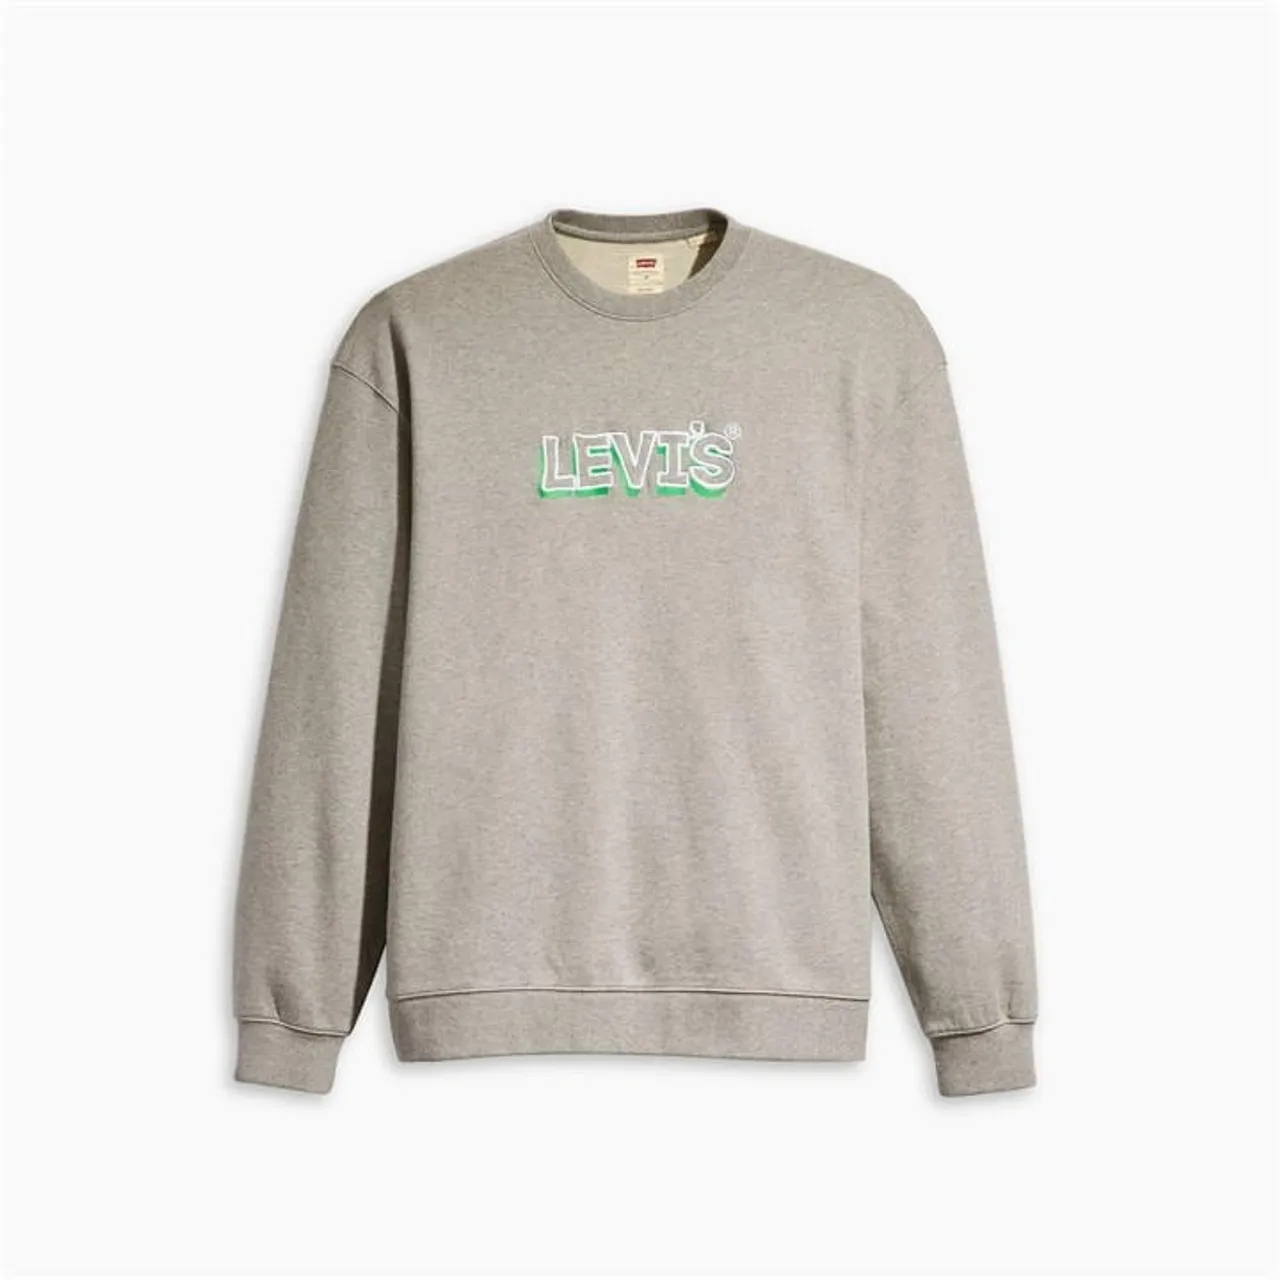 Levis Emblem Headline Sweater - Grey